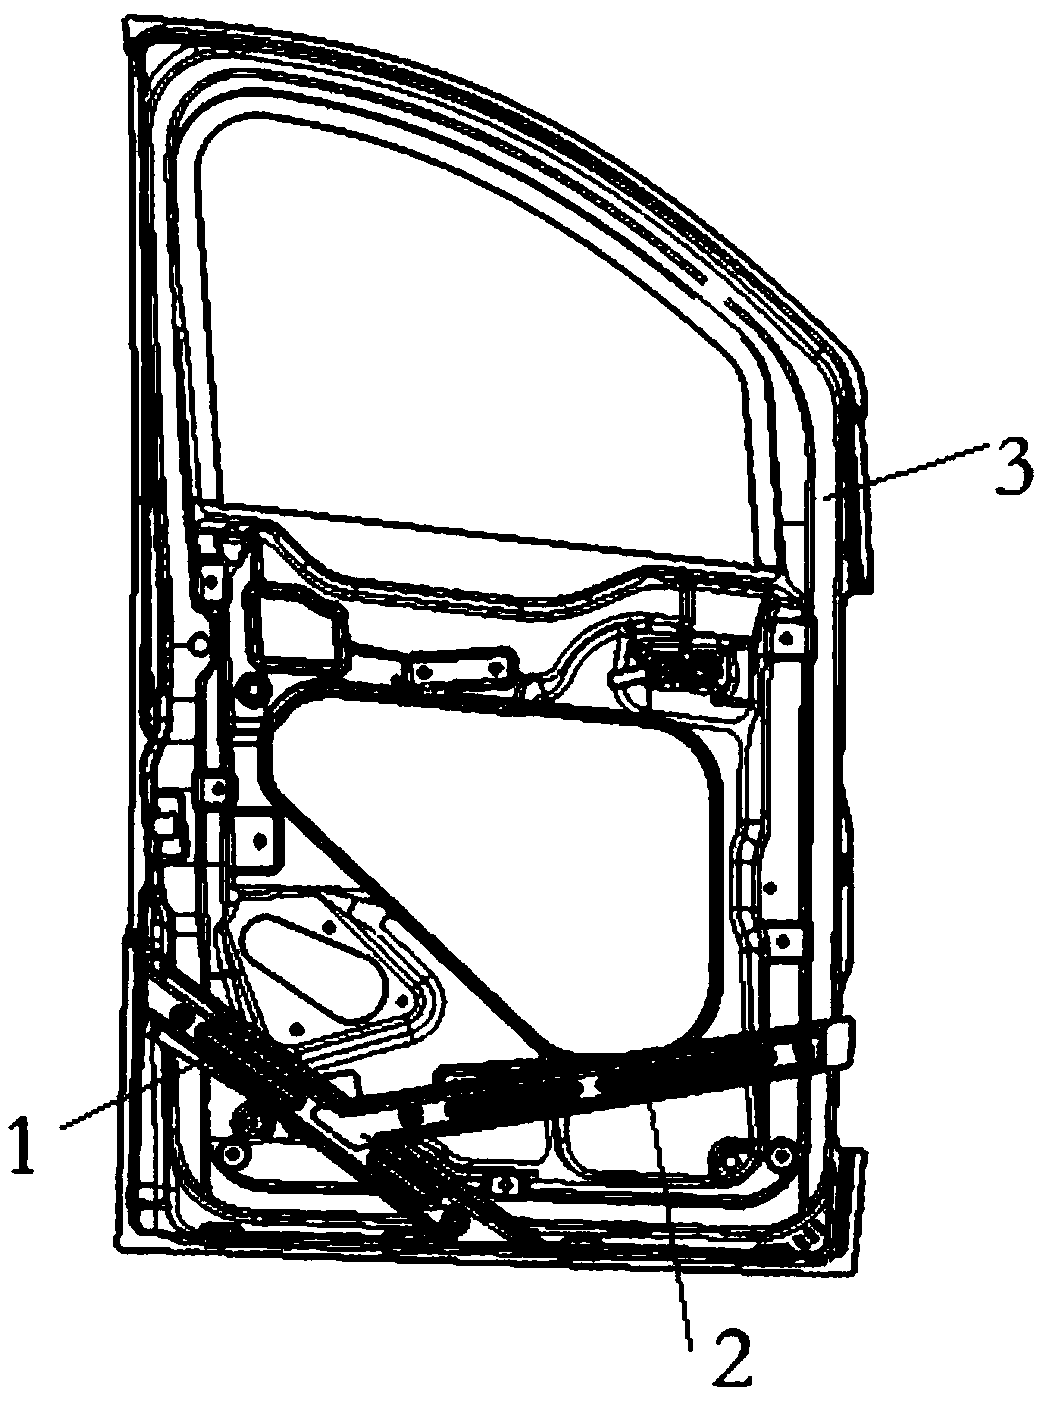 Anti-collision vehicle door structure